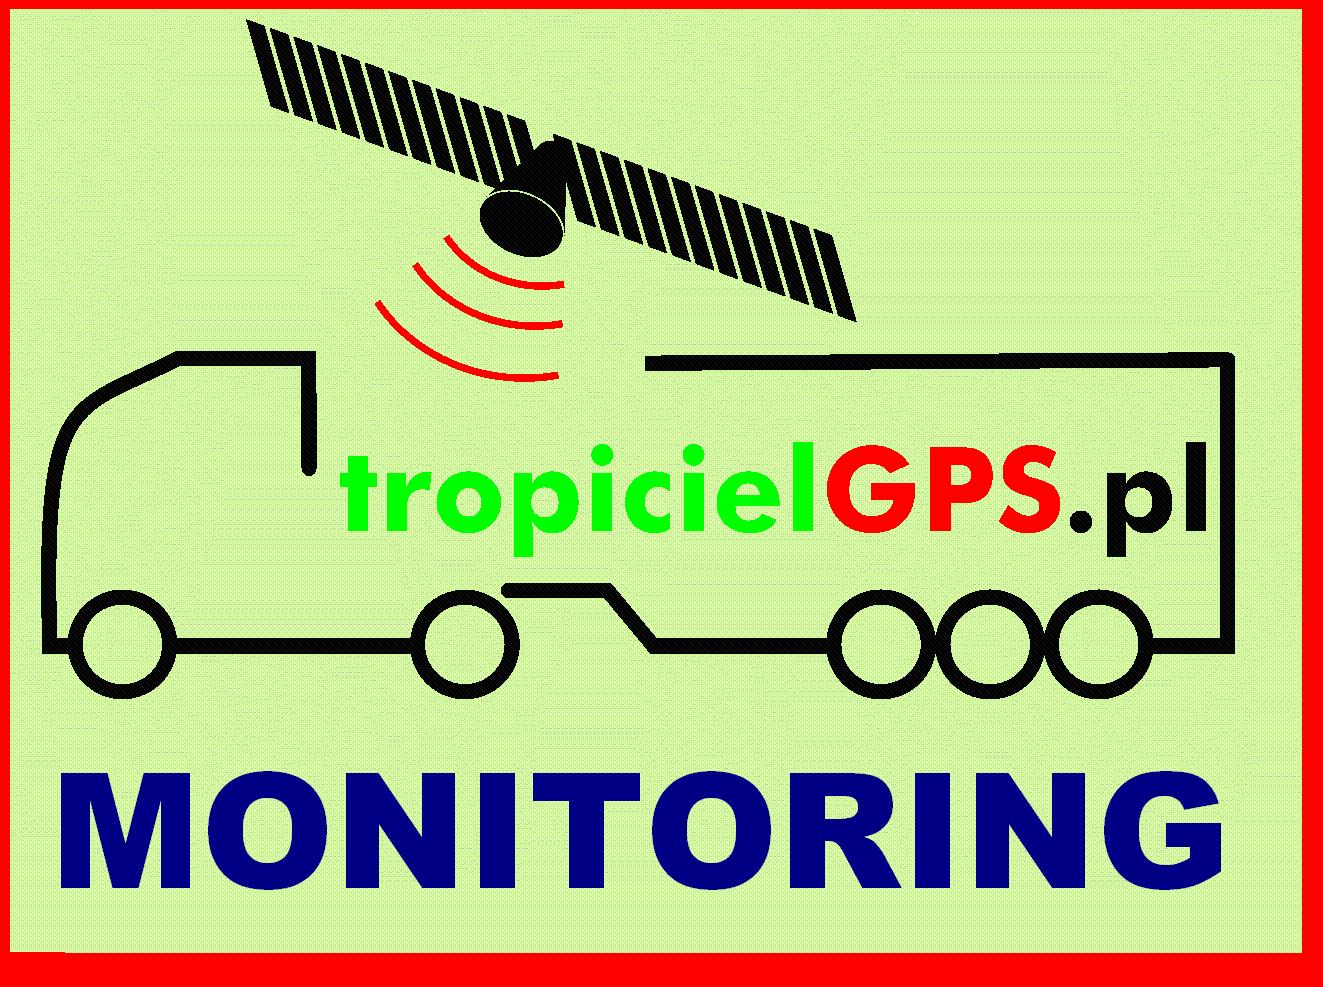 TropicielGPS monitoring gps